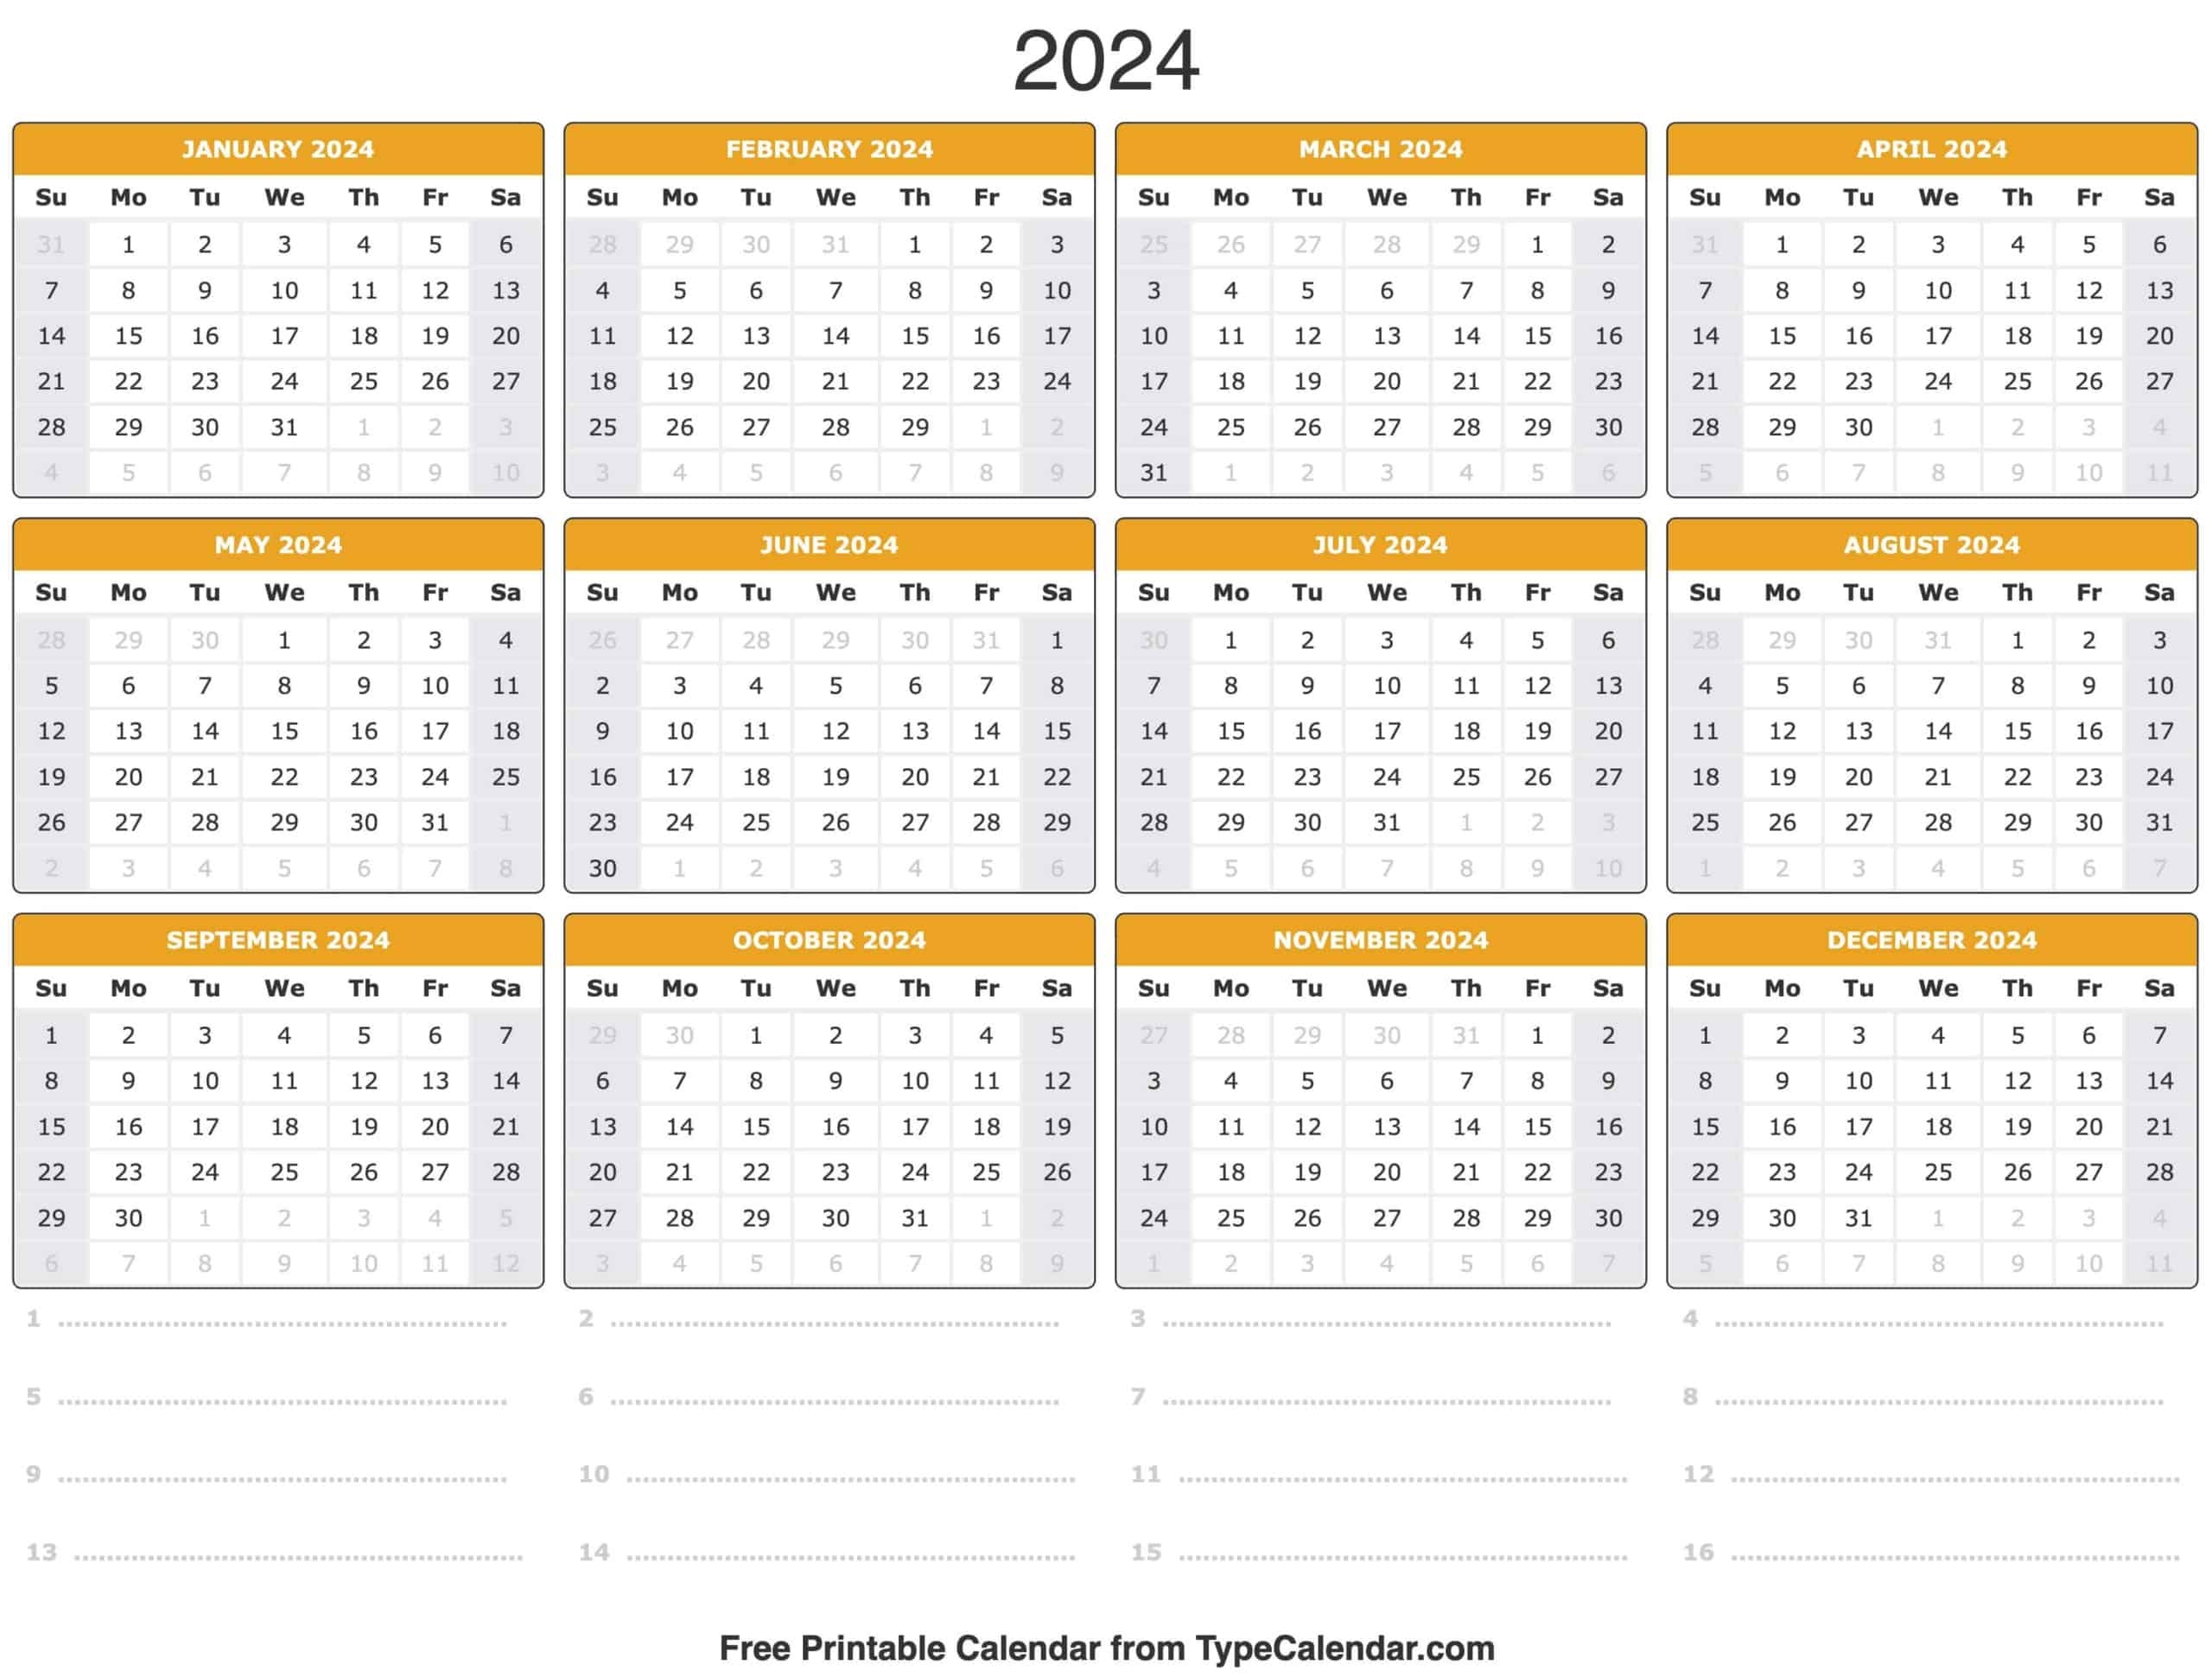 2024 Calendar: Free Printable Calendar With Holidays throughout Free Printable Calendar 2024 That I Can Edit